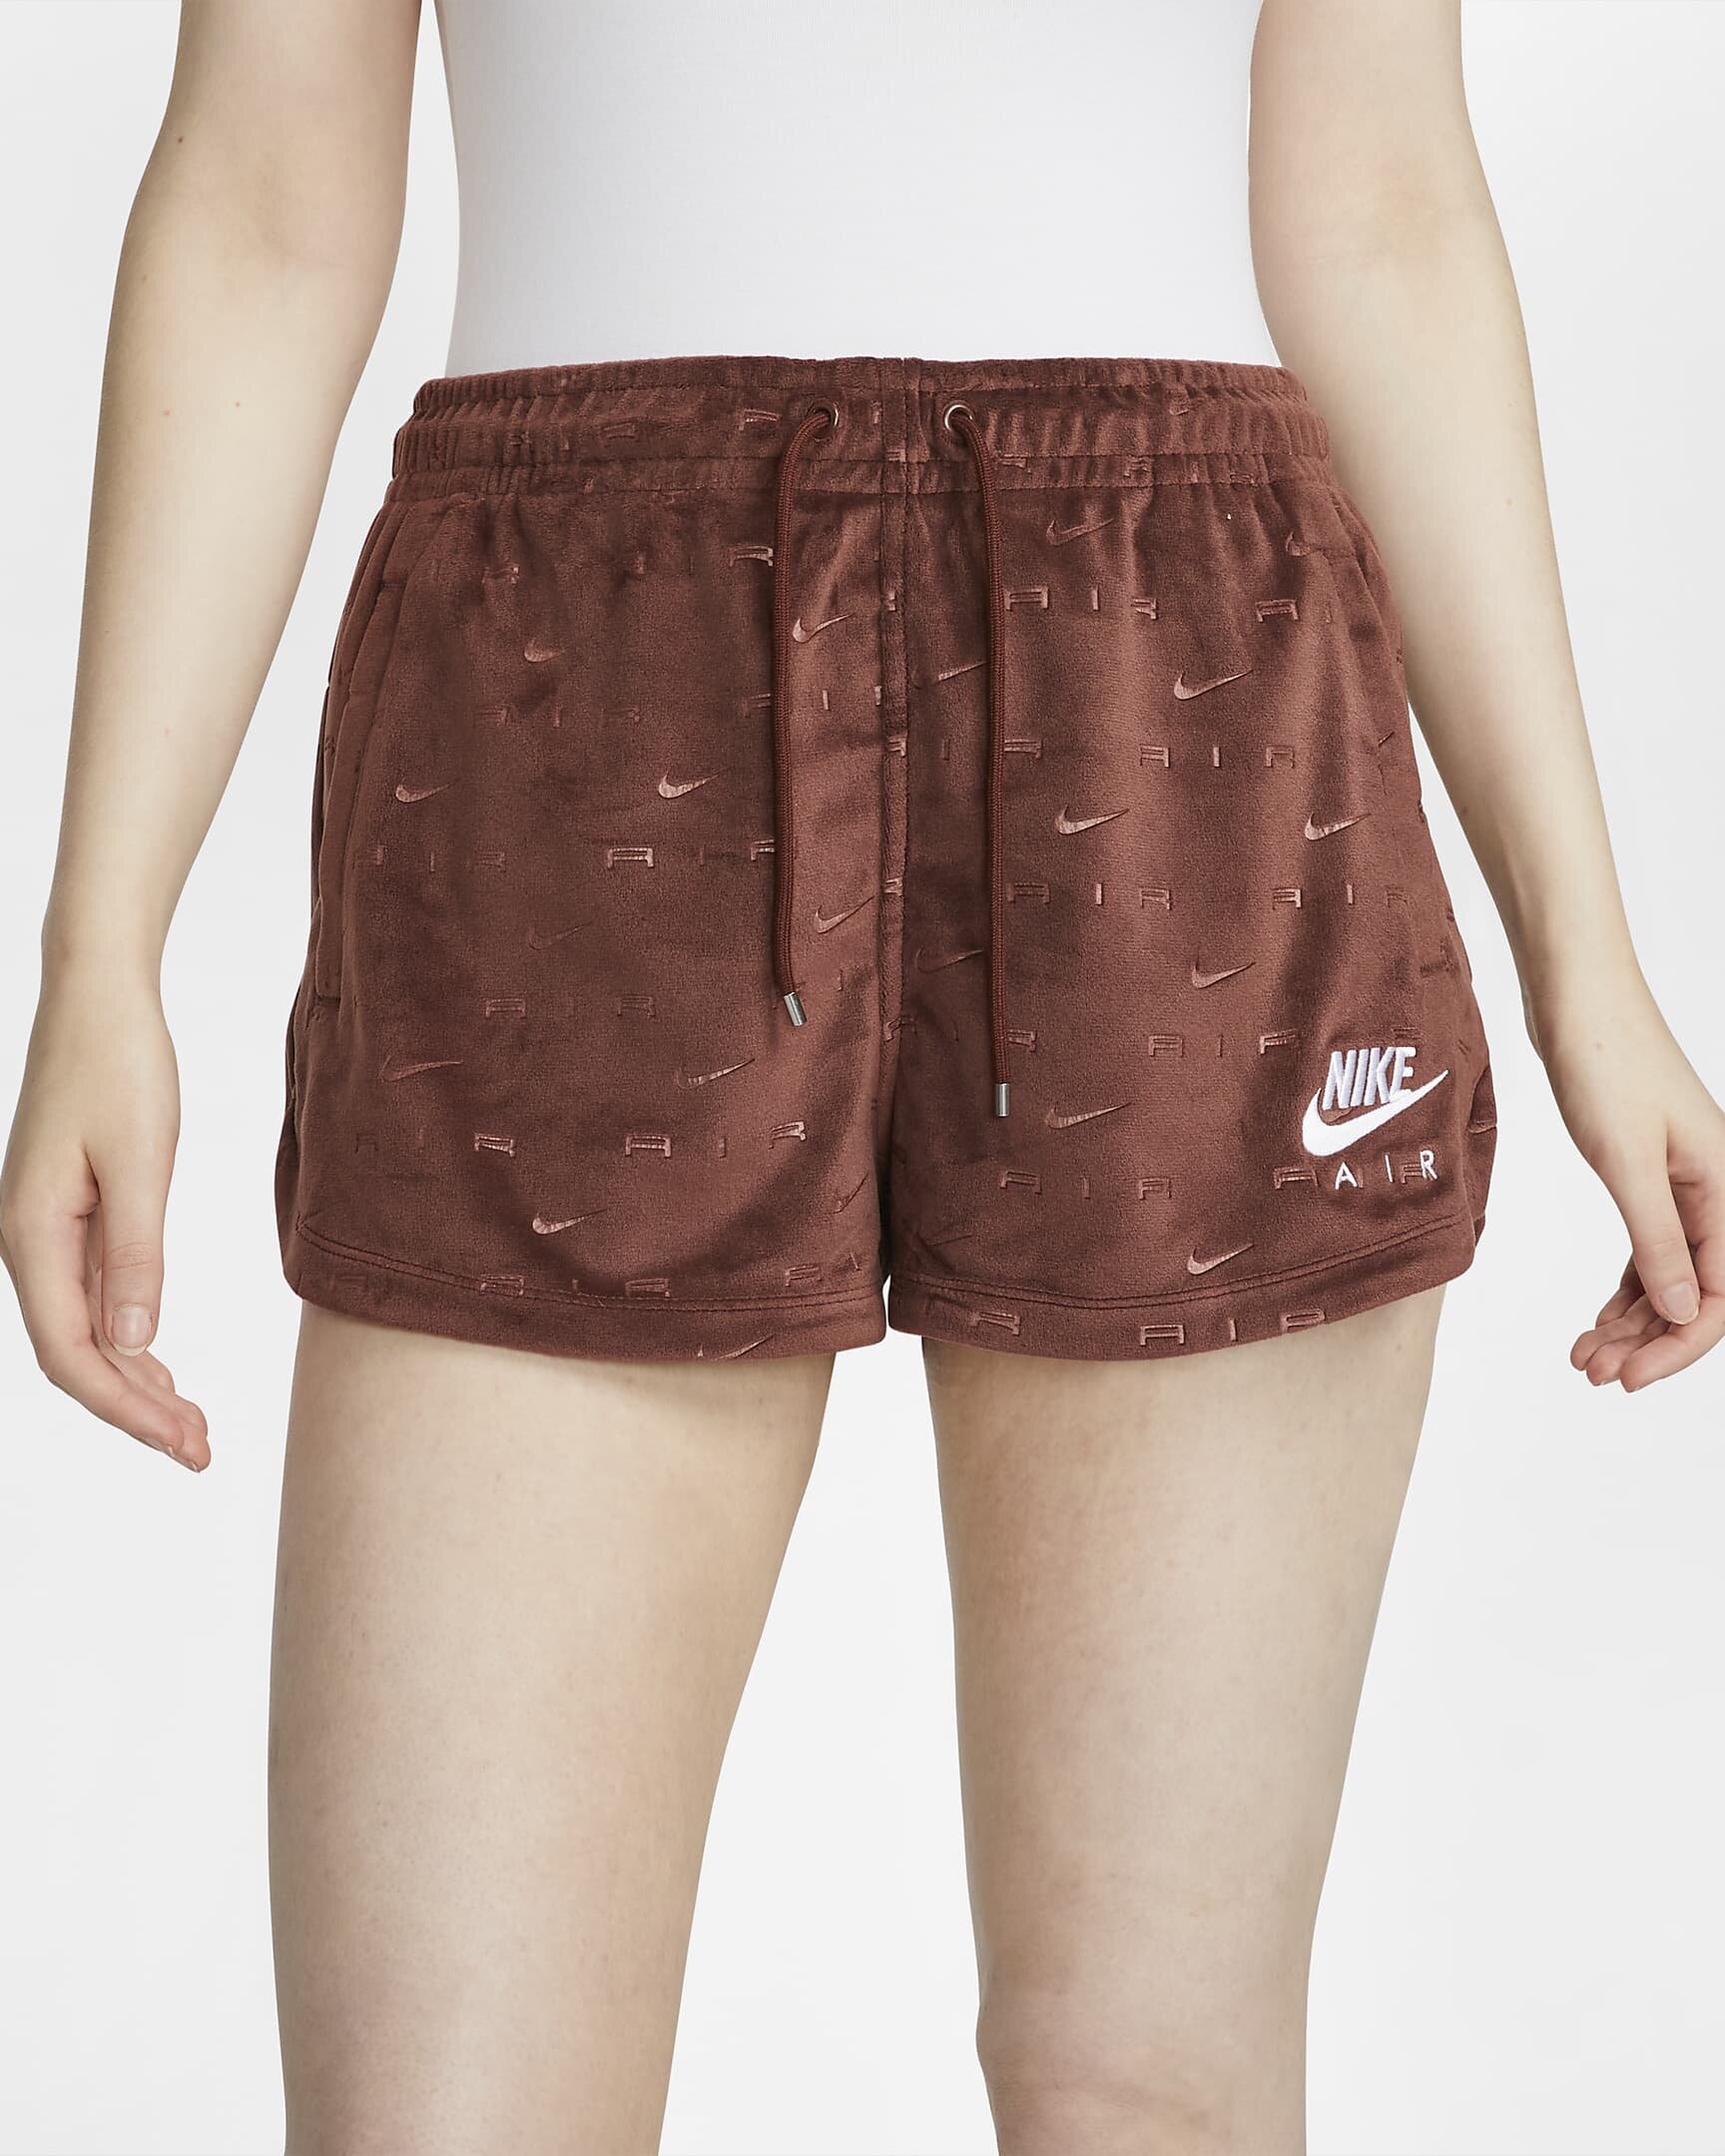 CNK-Nike-womens-velour-shorts-bronze-eclipse.jpeg